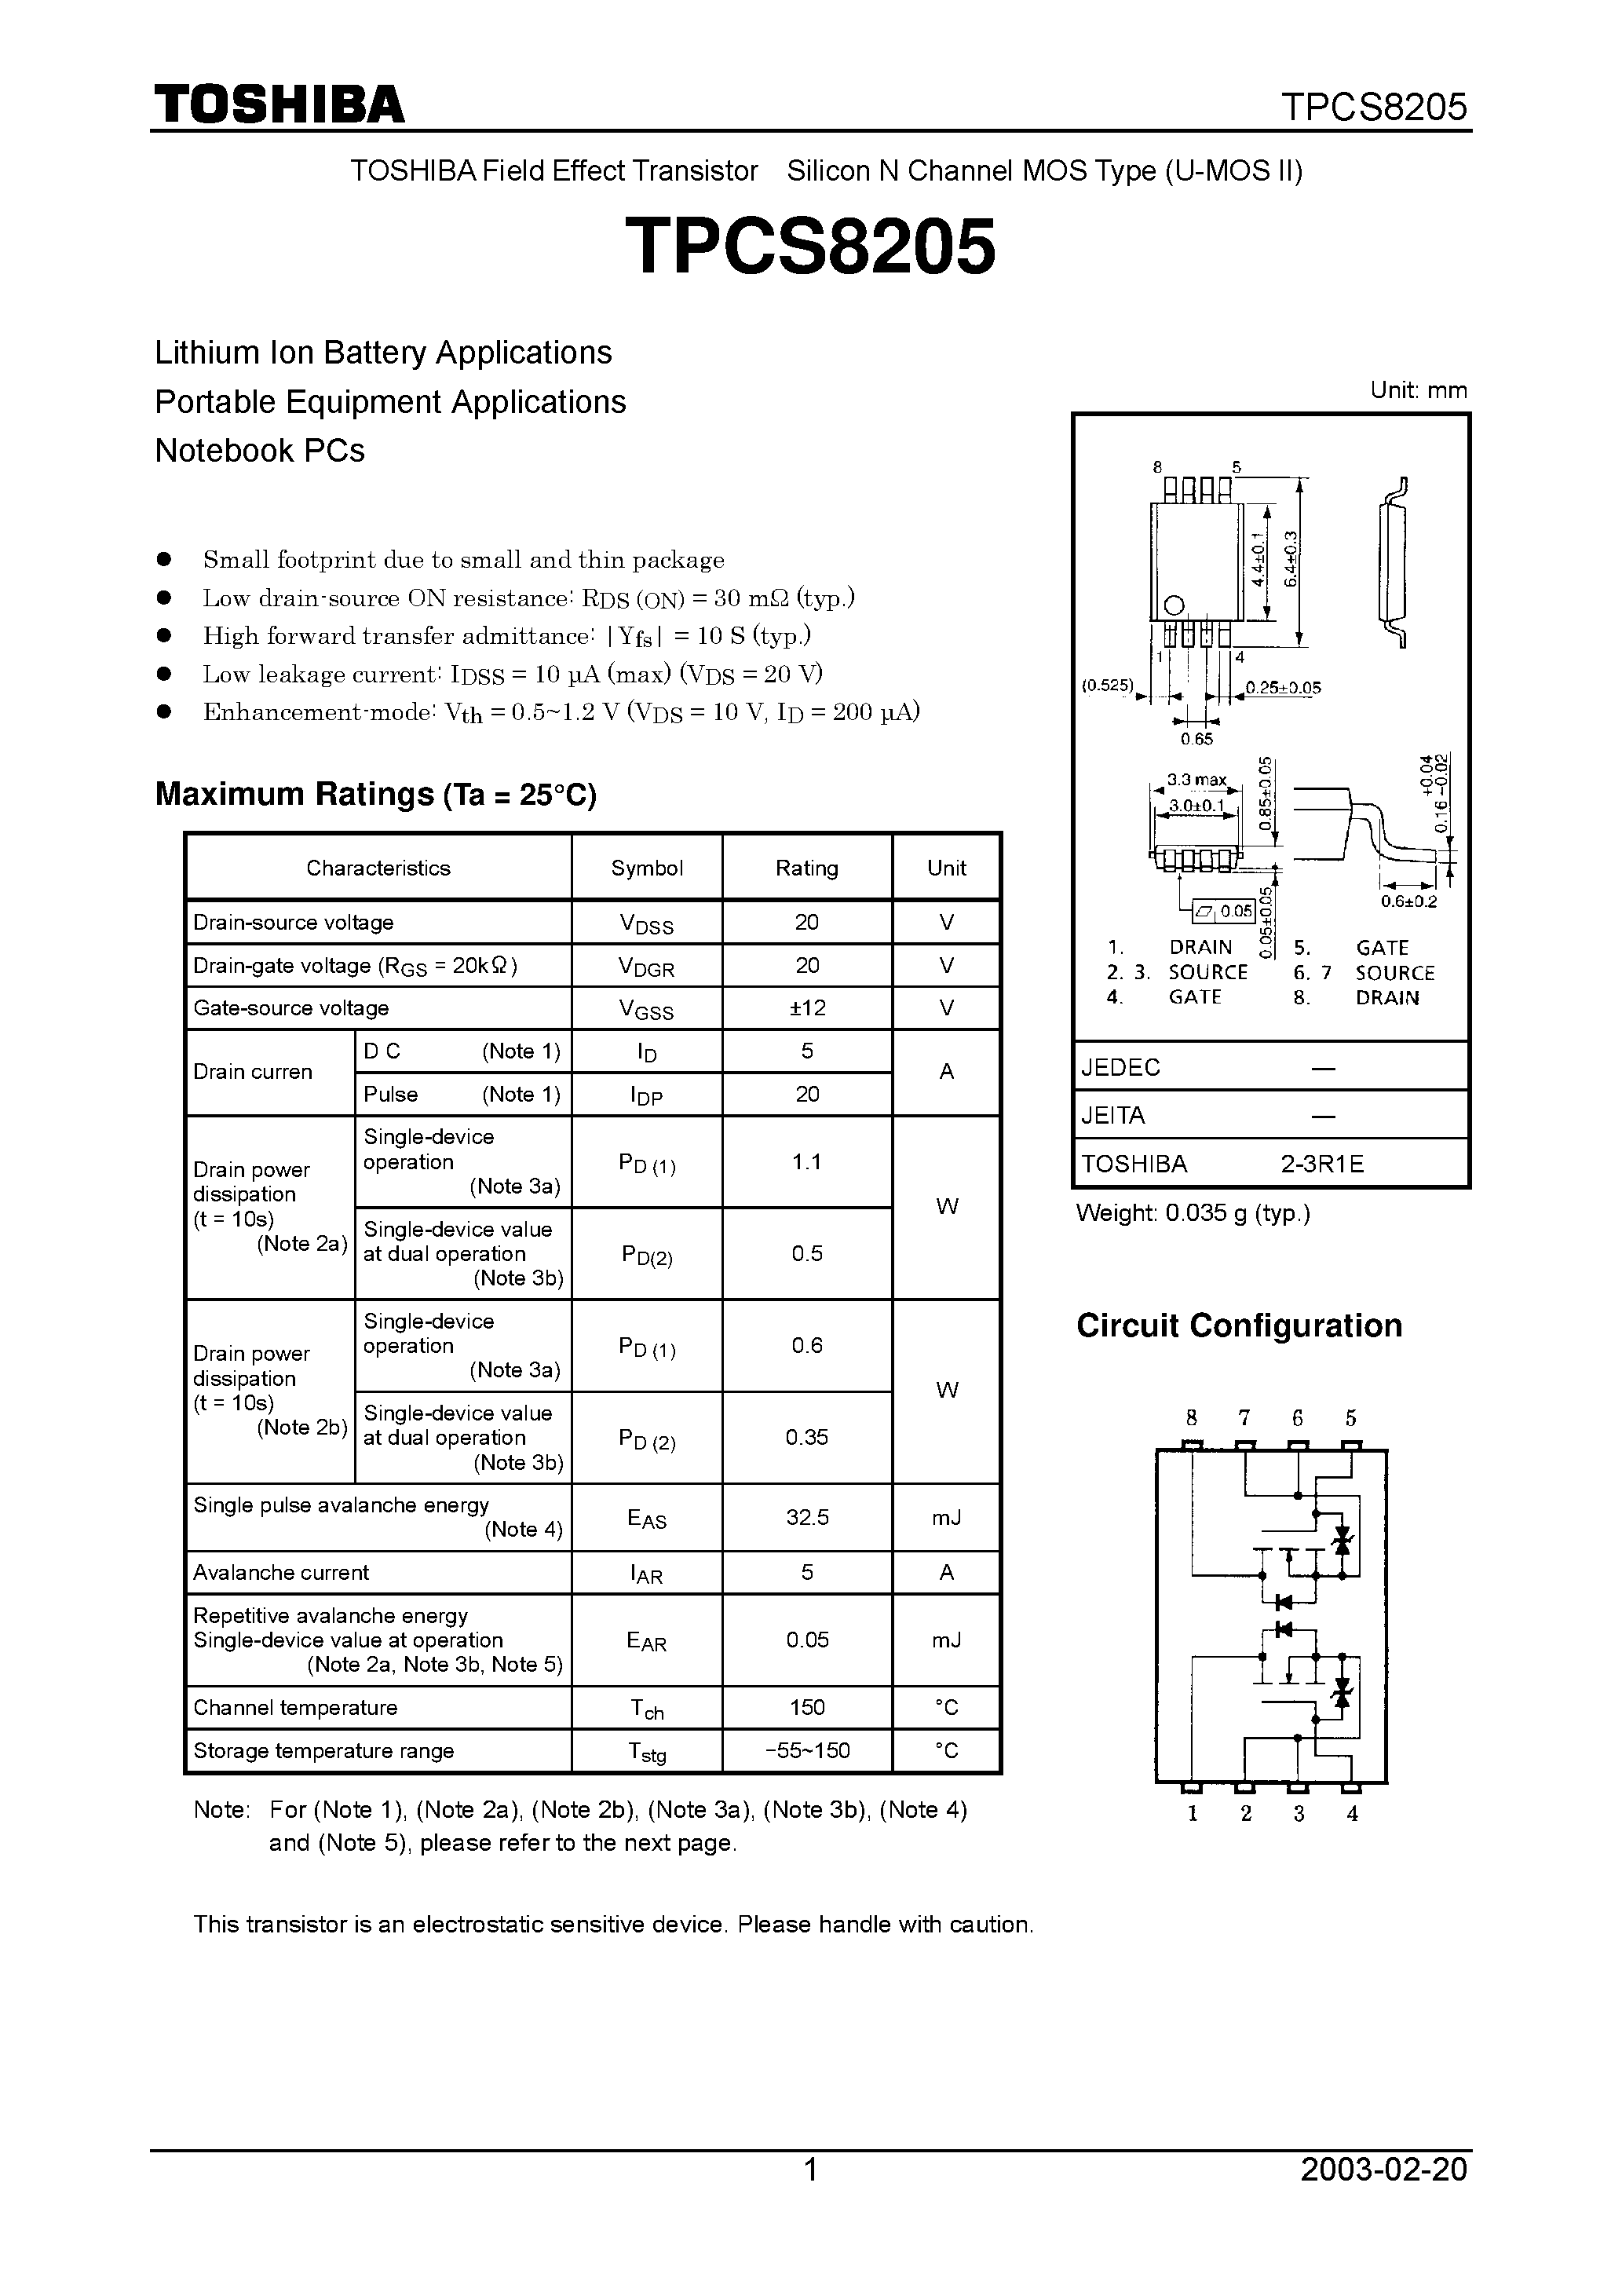 Datasheet TPCS8205 - TOSHIBA Field Effect Transistor Silicon N Channel MOS Type (U-MOS II) page 1